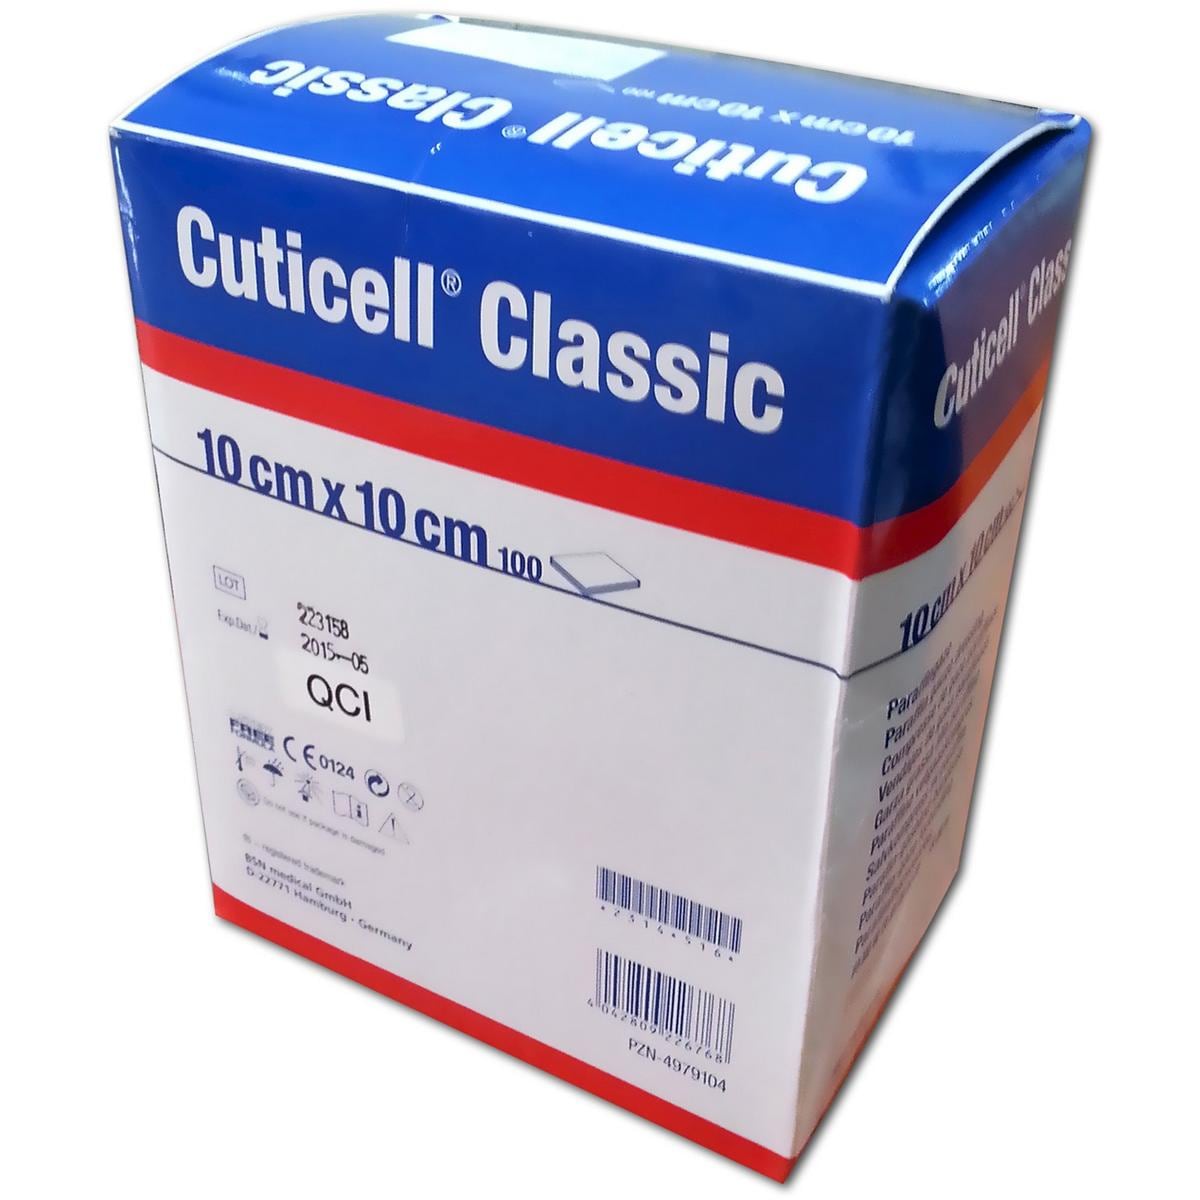 Cuticell Classic zalfkompres - 10 x 10 cm, 10 stuks